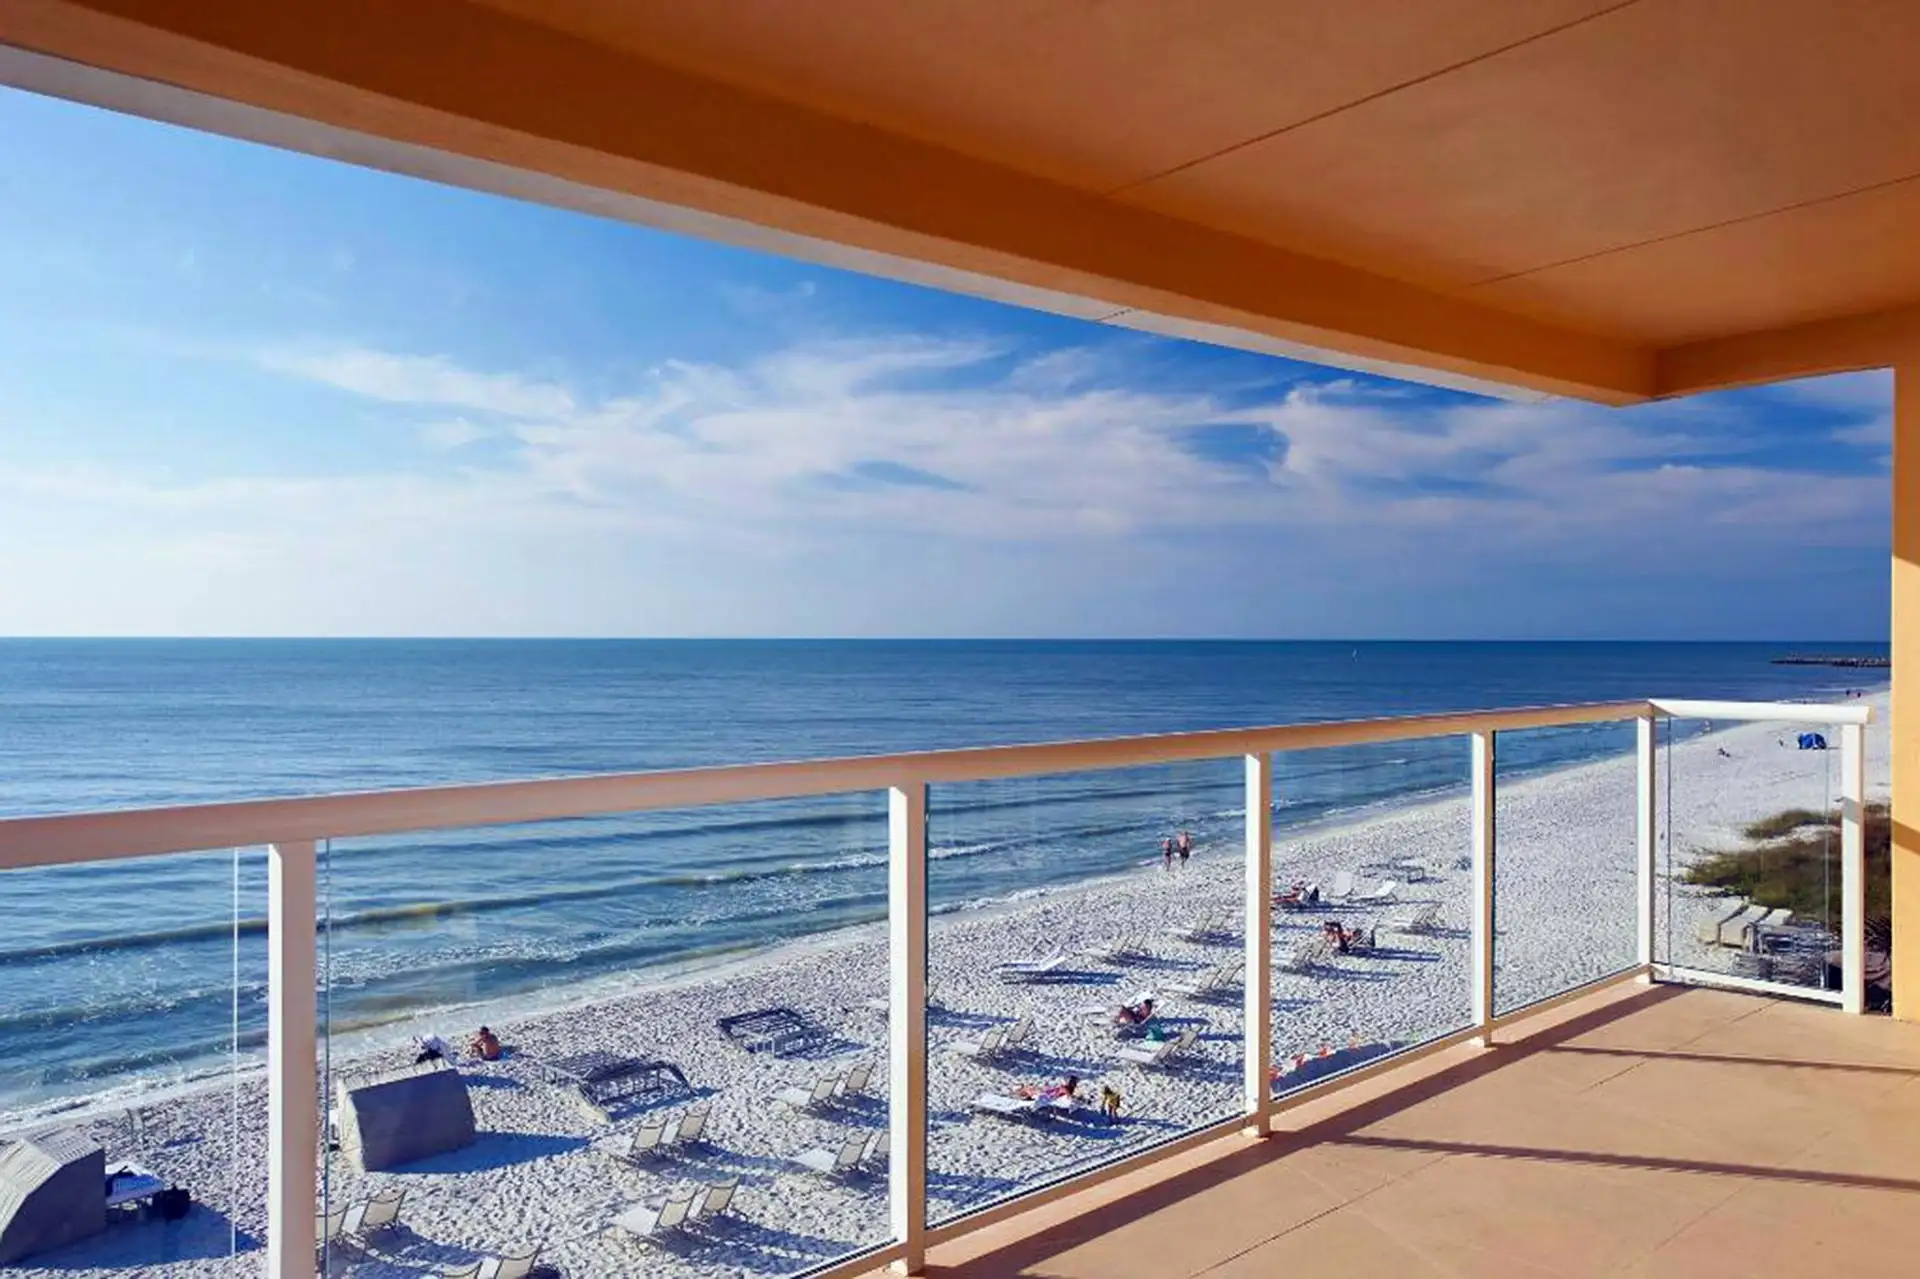 Edgewater Beach Hotel in Naples, Florida